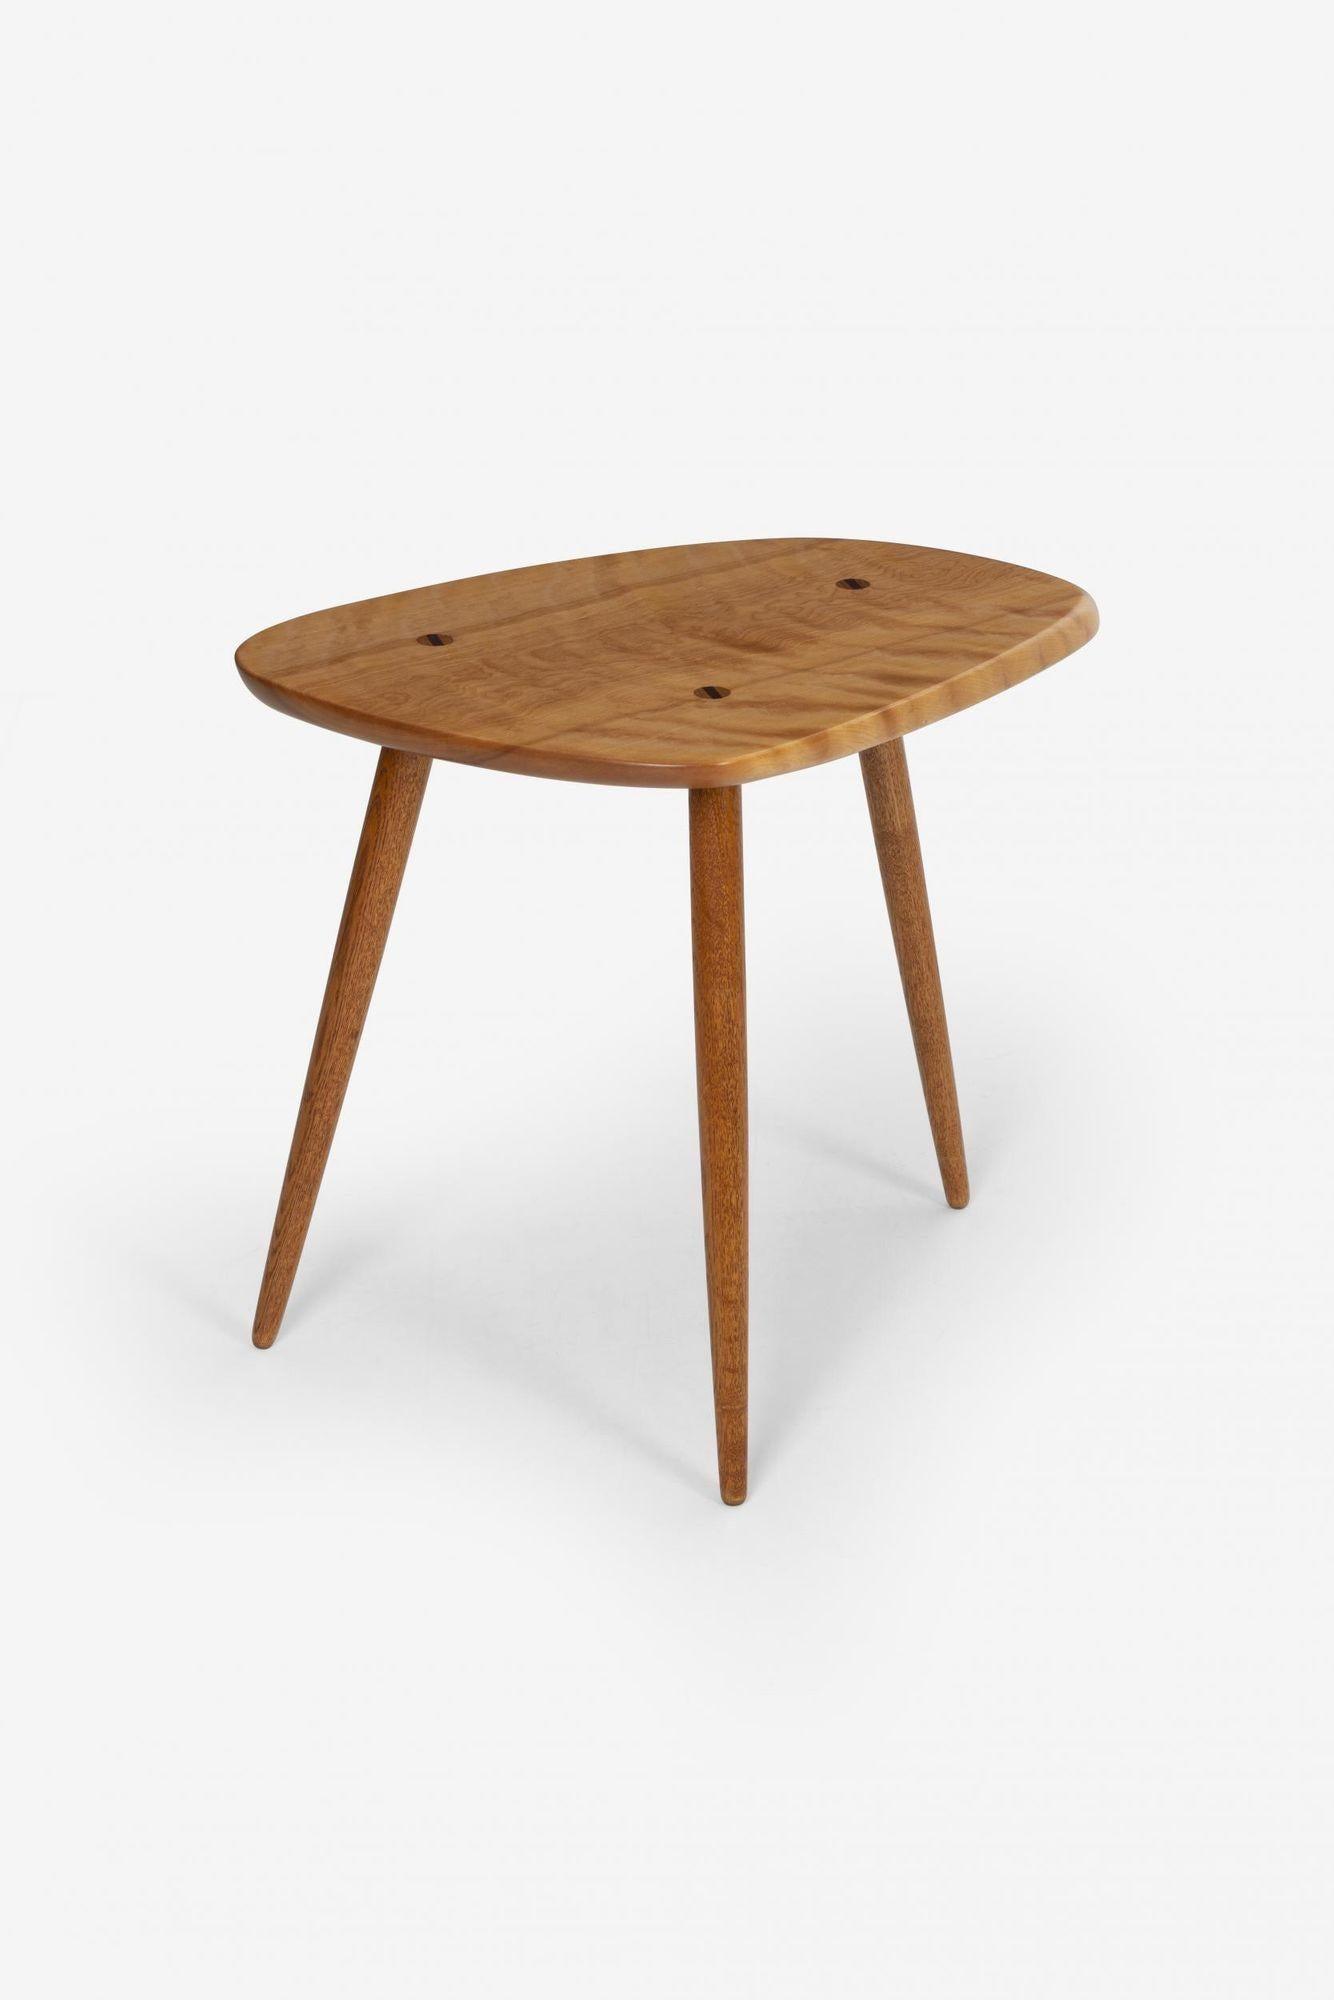 American Arthur Espenet Carpenter Three-Legged Occasional Table For Sale